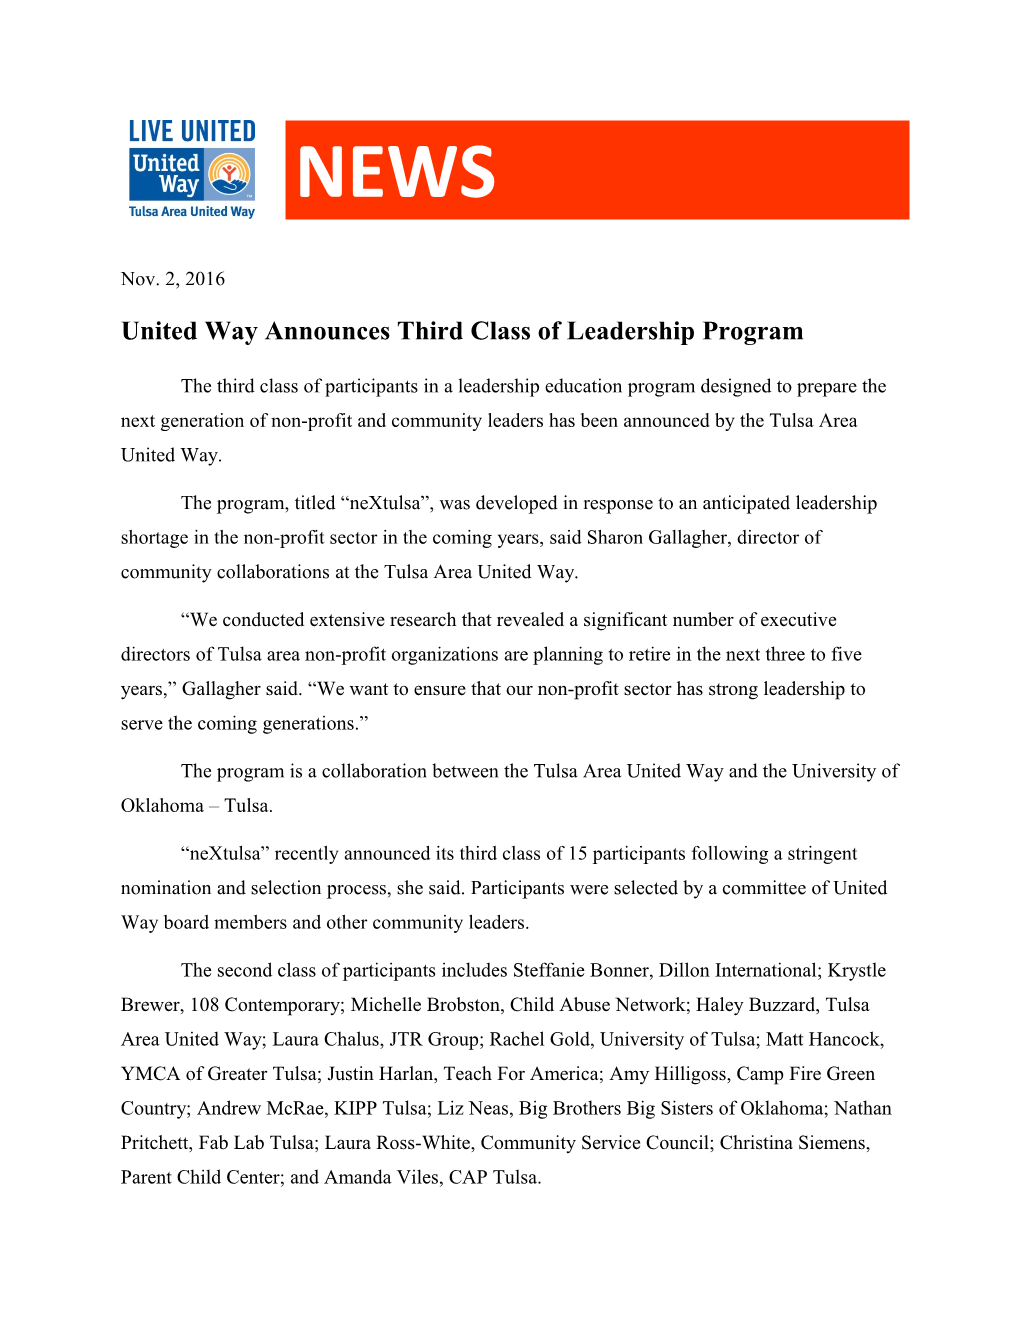 United Way Announces Third Class of Leadership Program